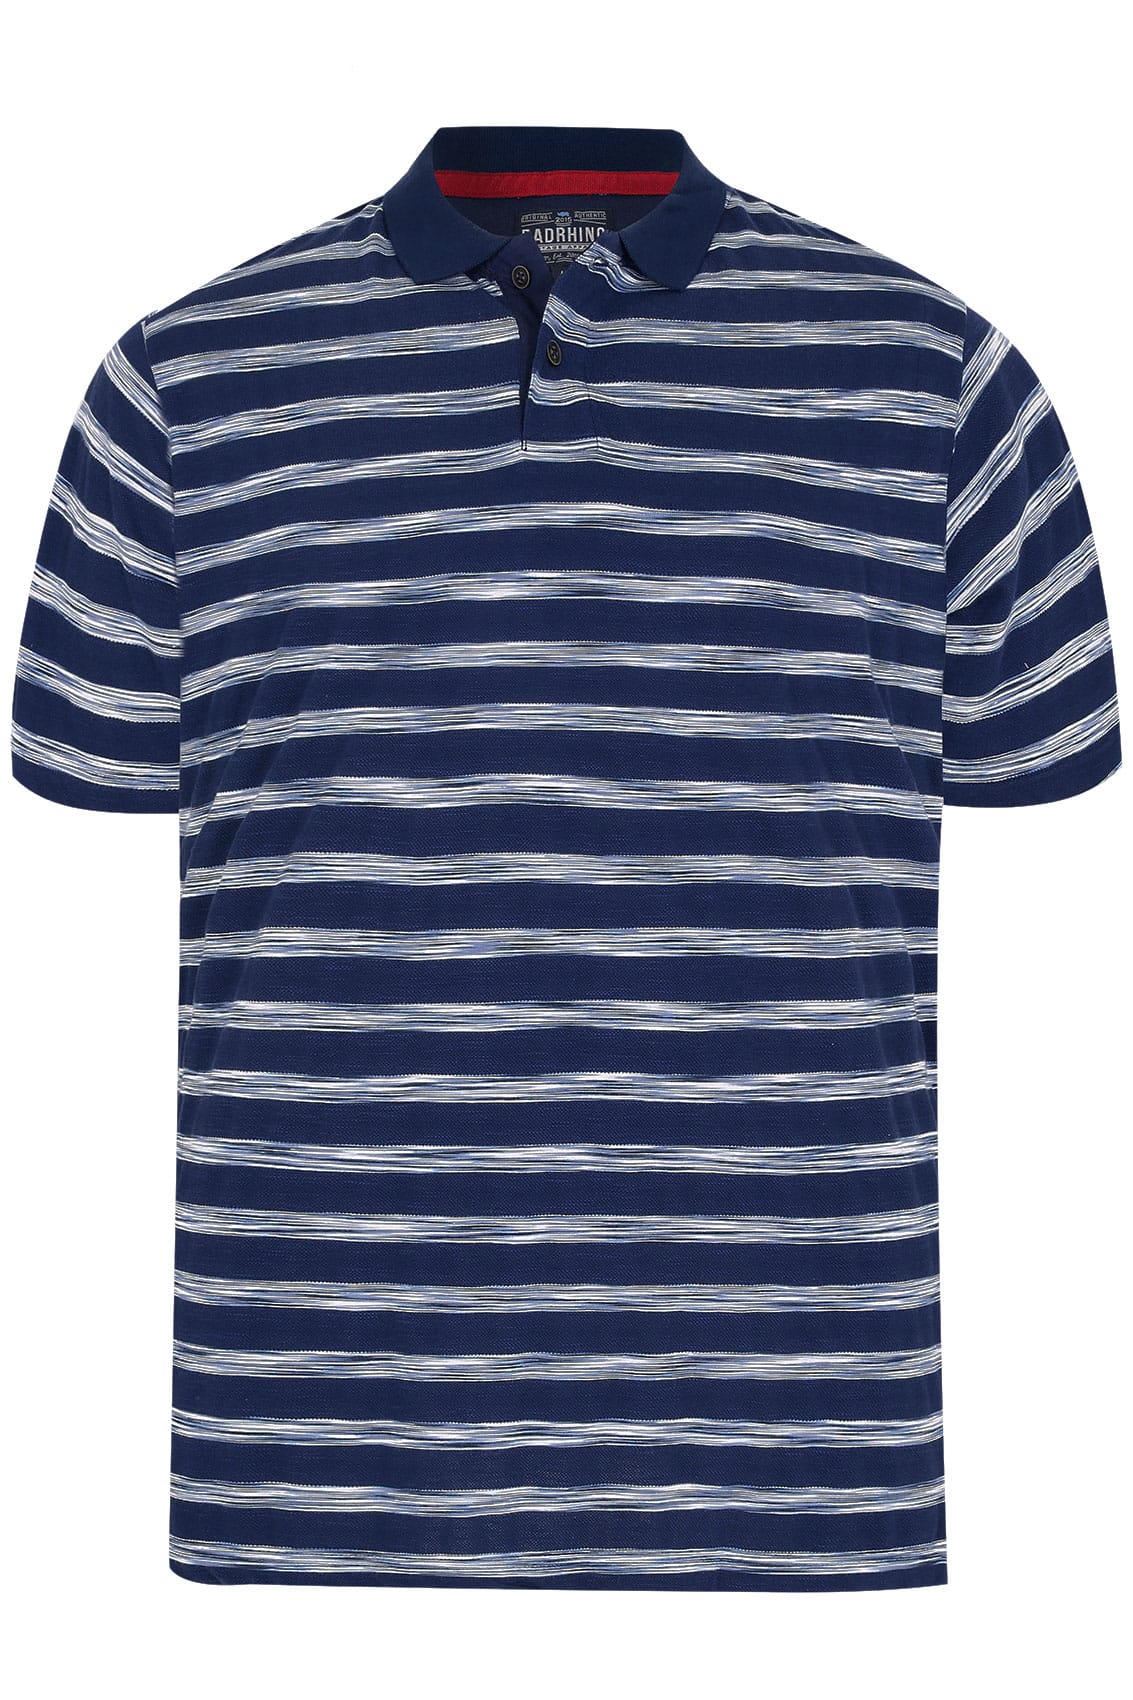 BadRhino Navy & Blue Stripe Polo Shirt - TALL Extra Large L to 6XL